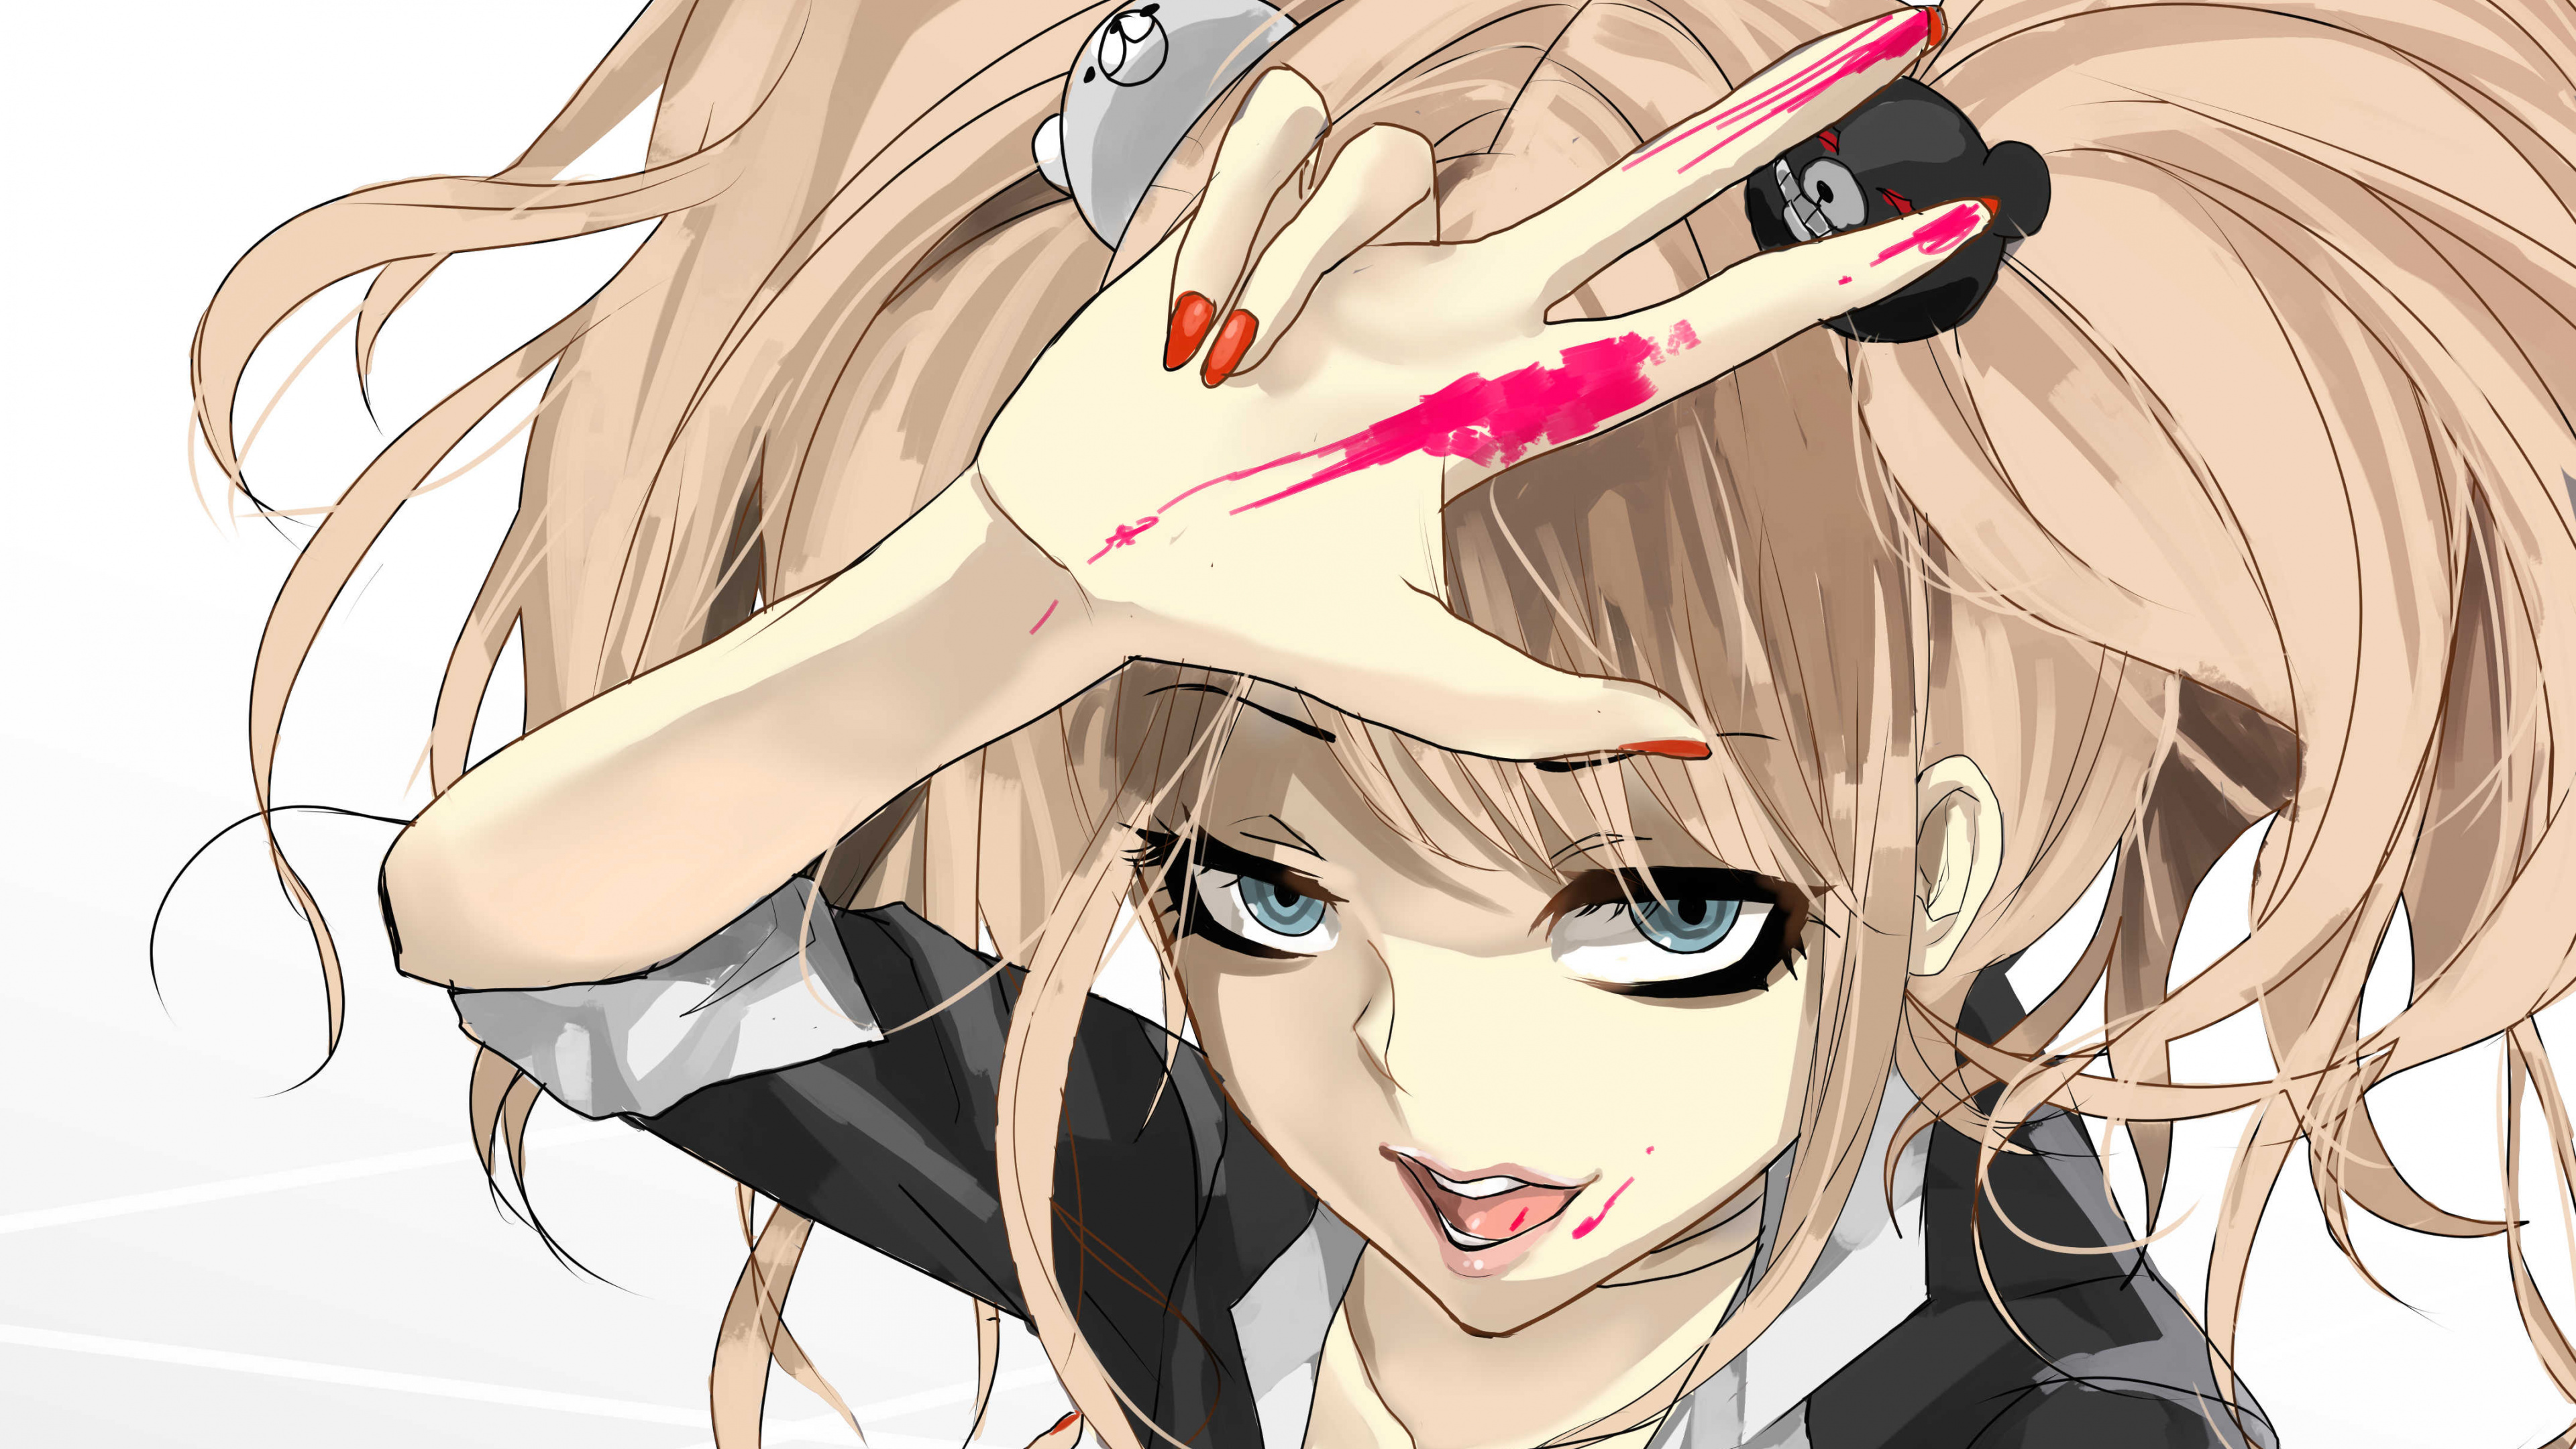 Anime-Charakter Mit Blonden Haaren. Wallpaper in 3840x2160 Resolution